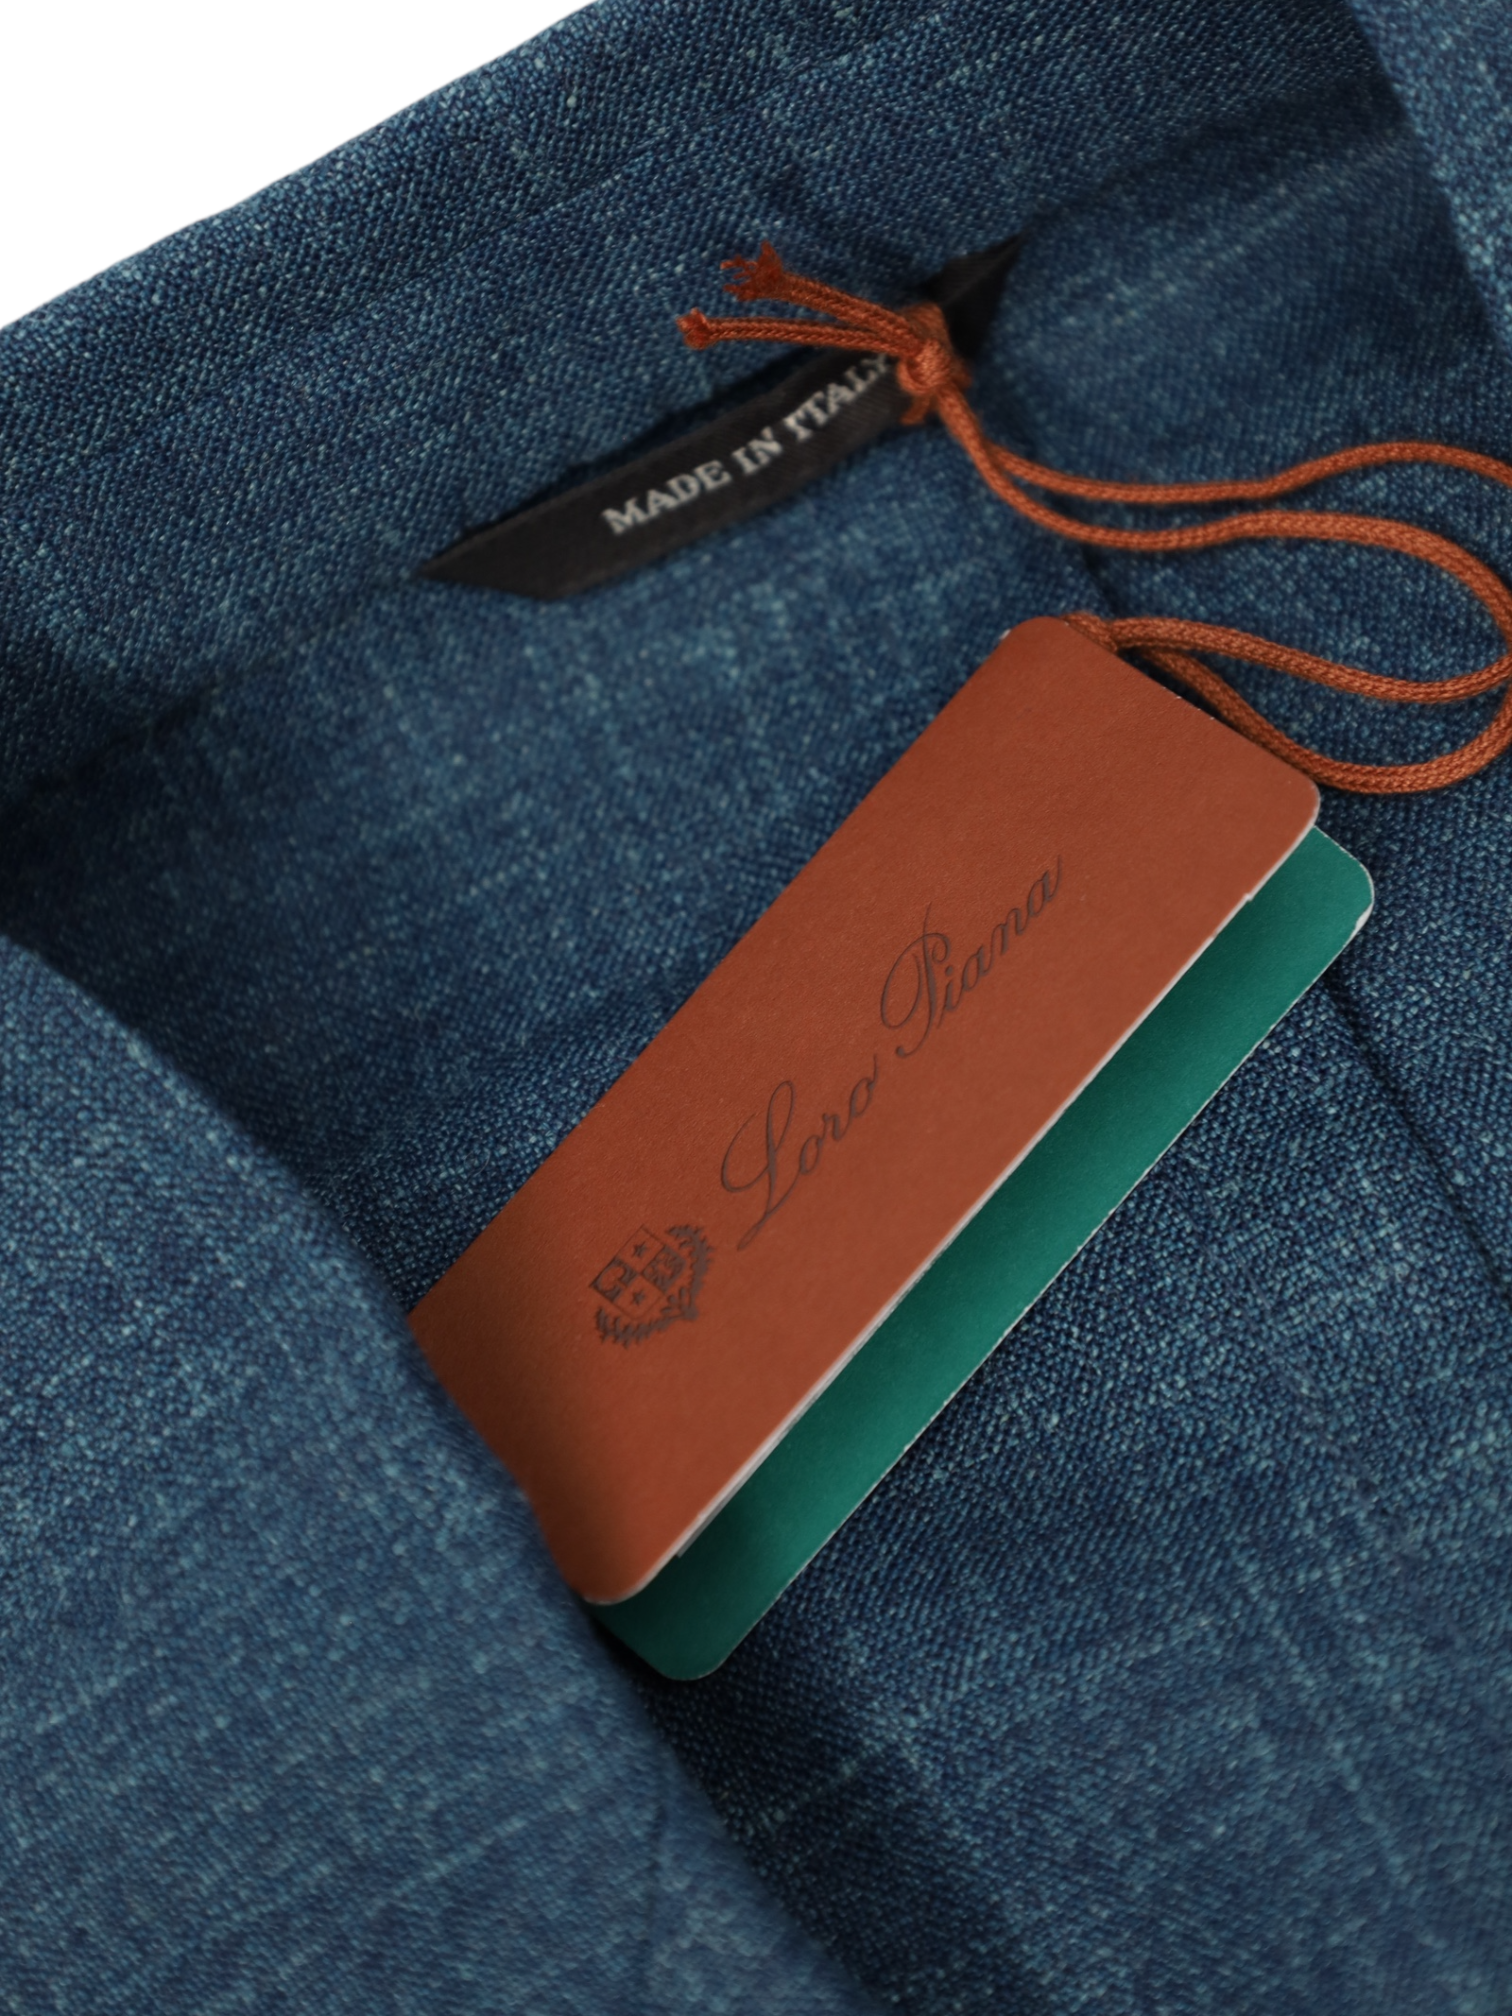 Loro Piana Petrol Wool, Silk & Linen "Summertime" Double-Breasted Jacket